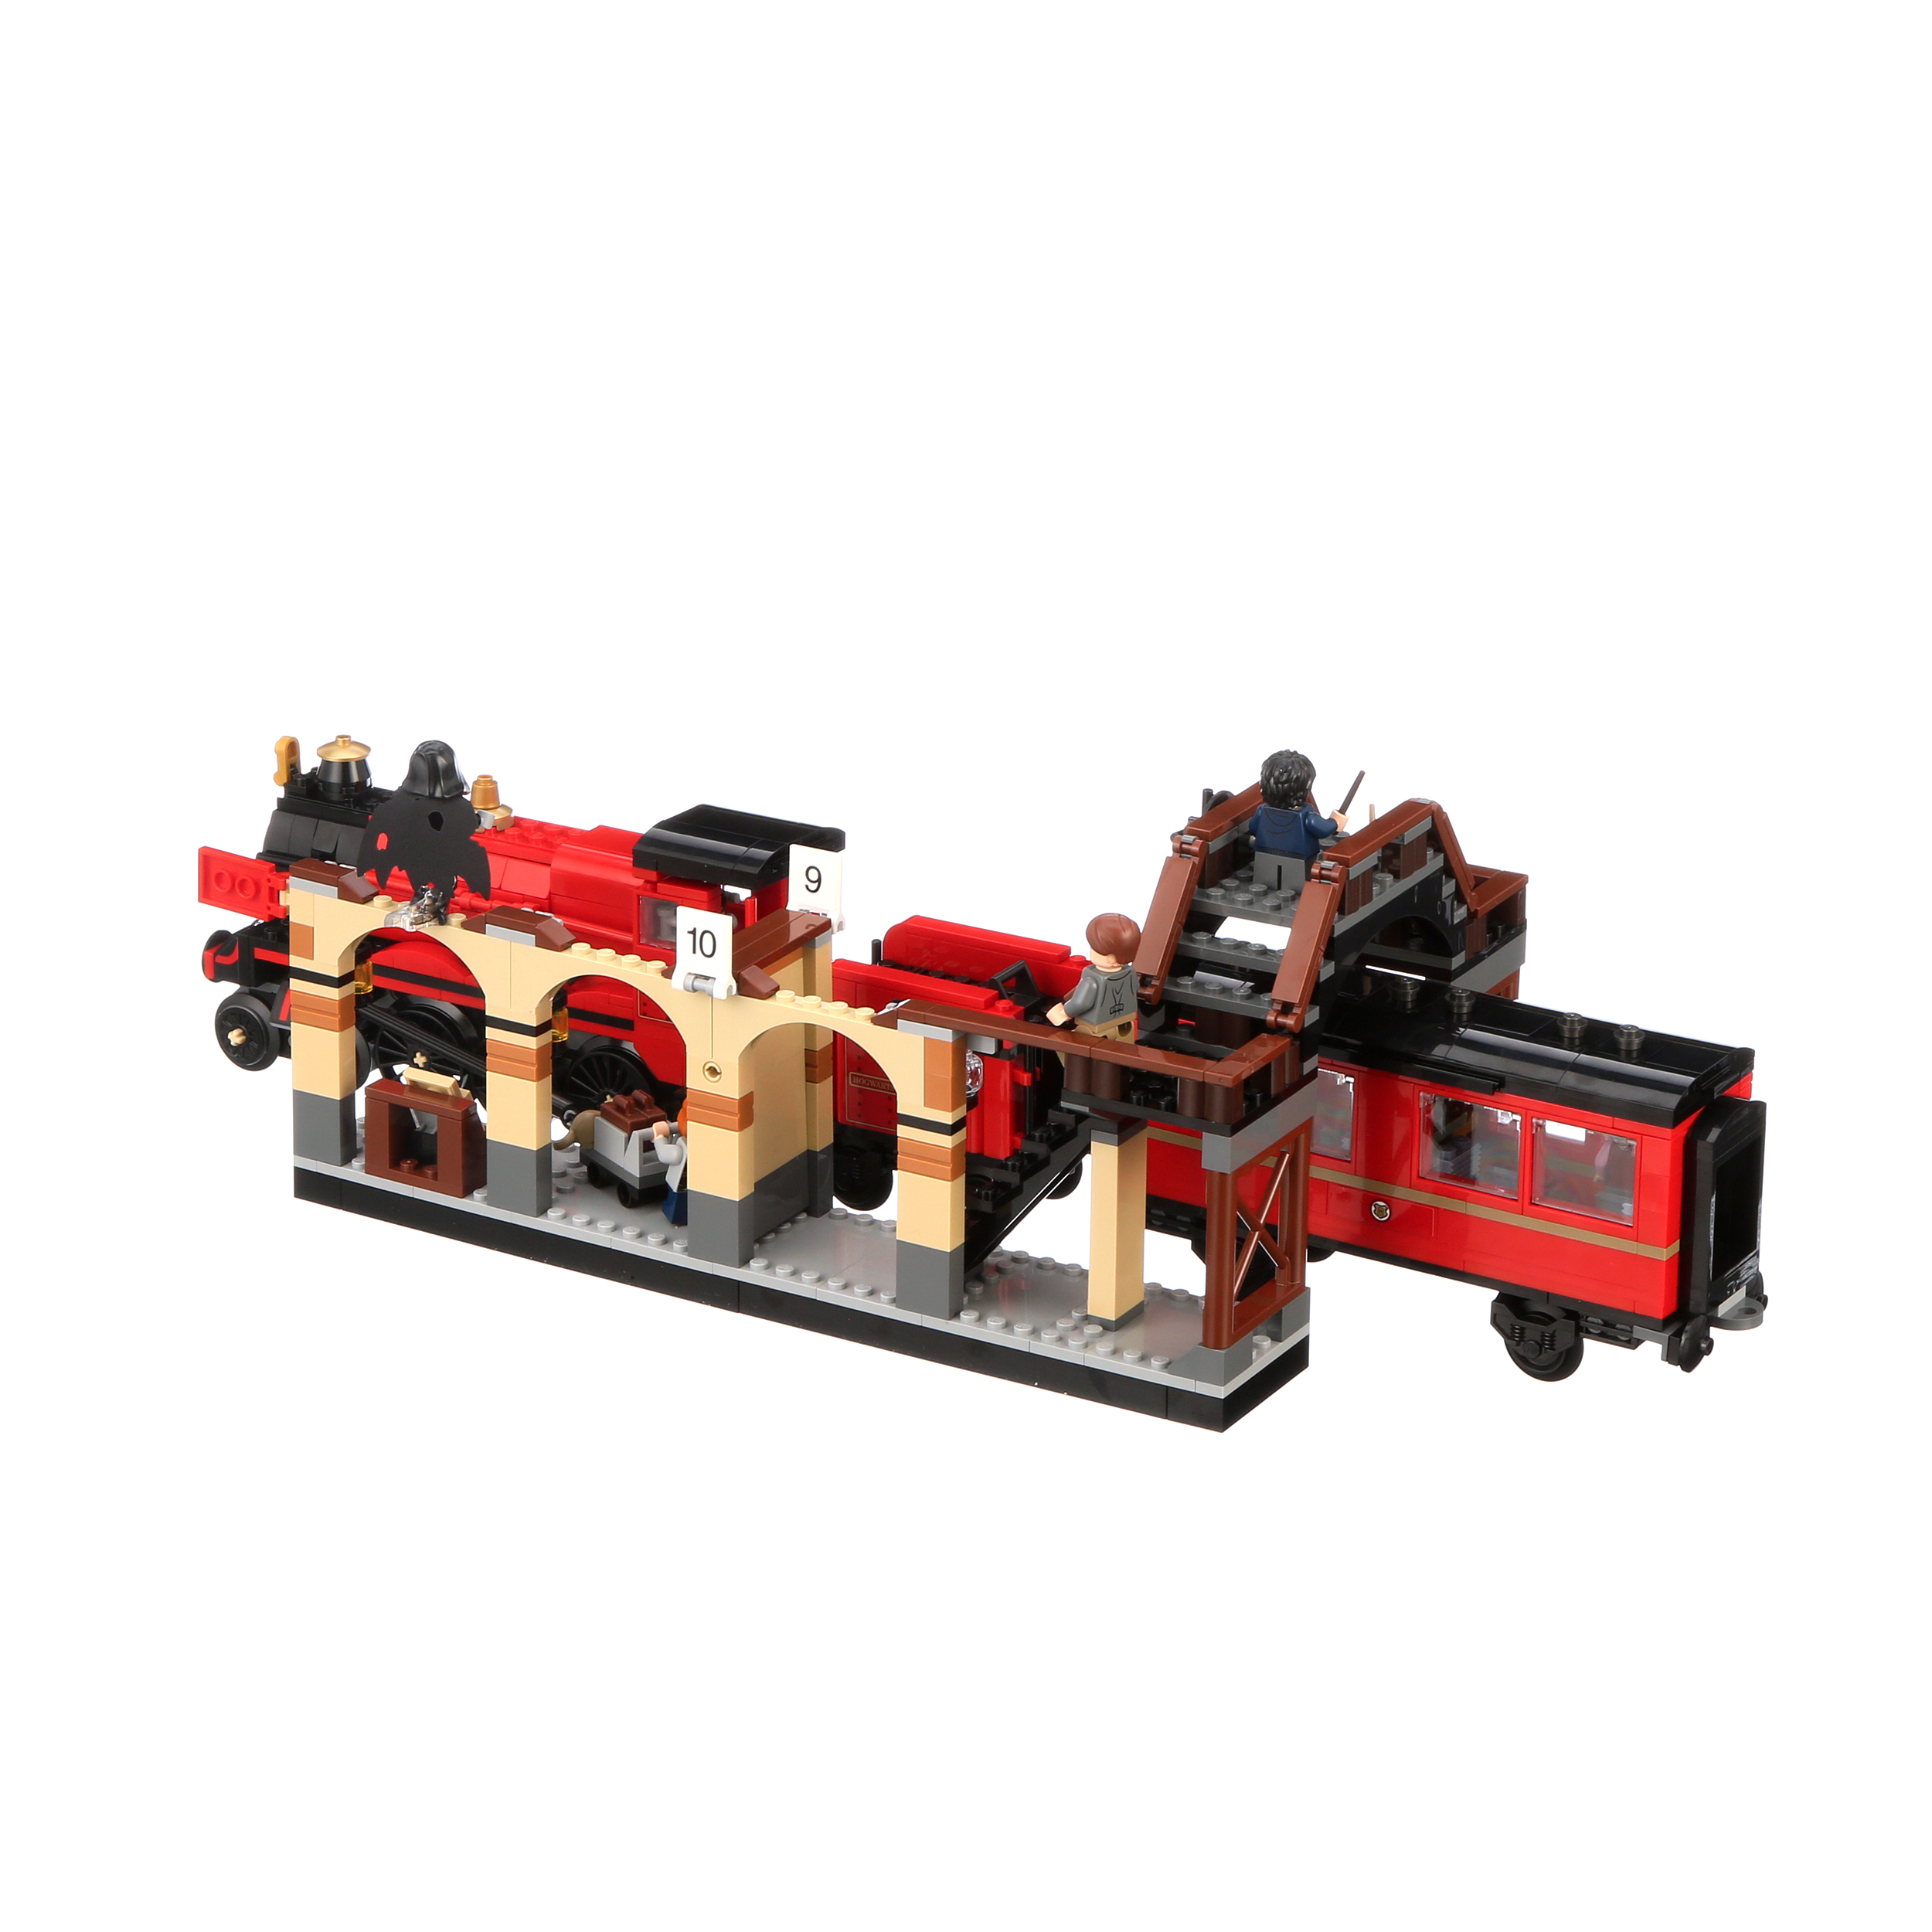 LEGO Harry Potter Hogwarts Express 75955 Toy Model Train Building Set 